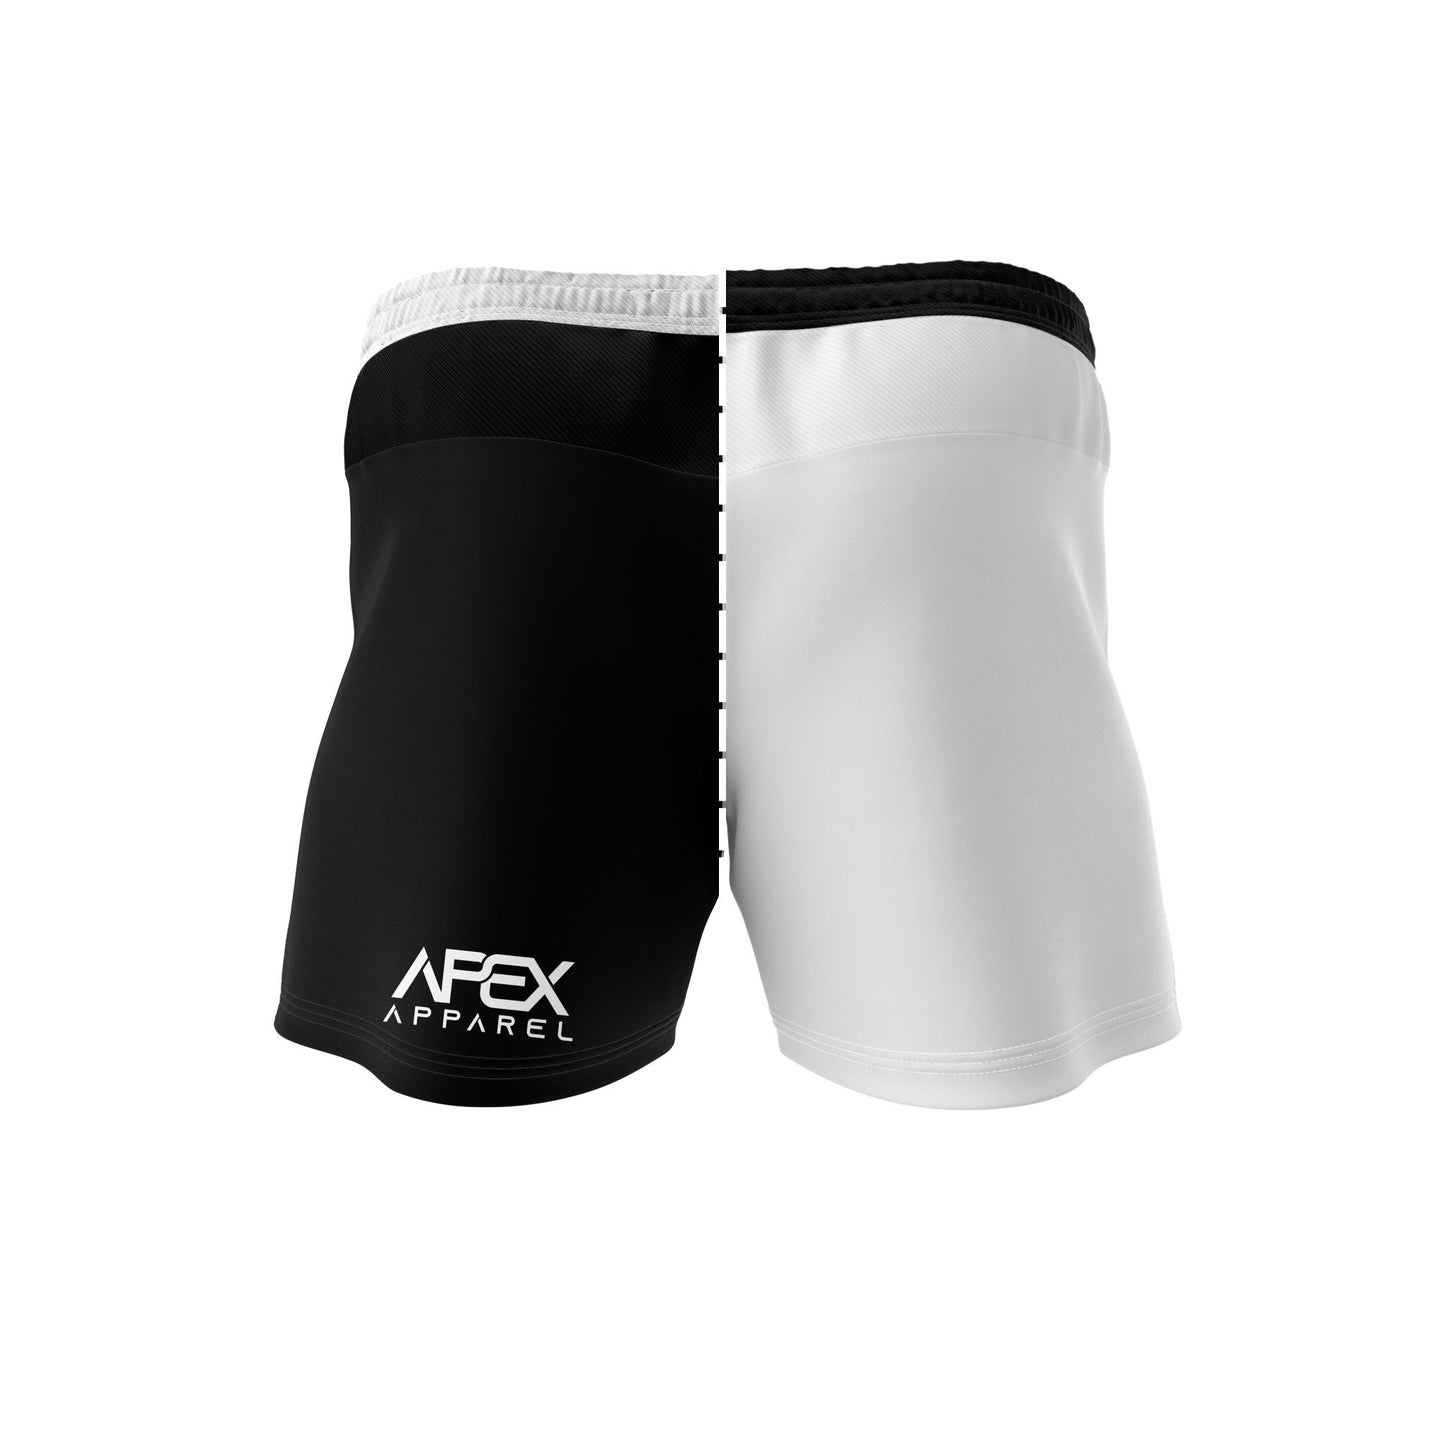 Custom Reversible Soccer Shorts - Phoenix